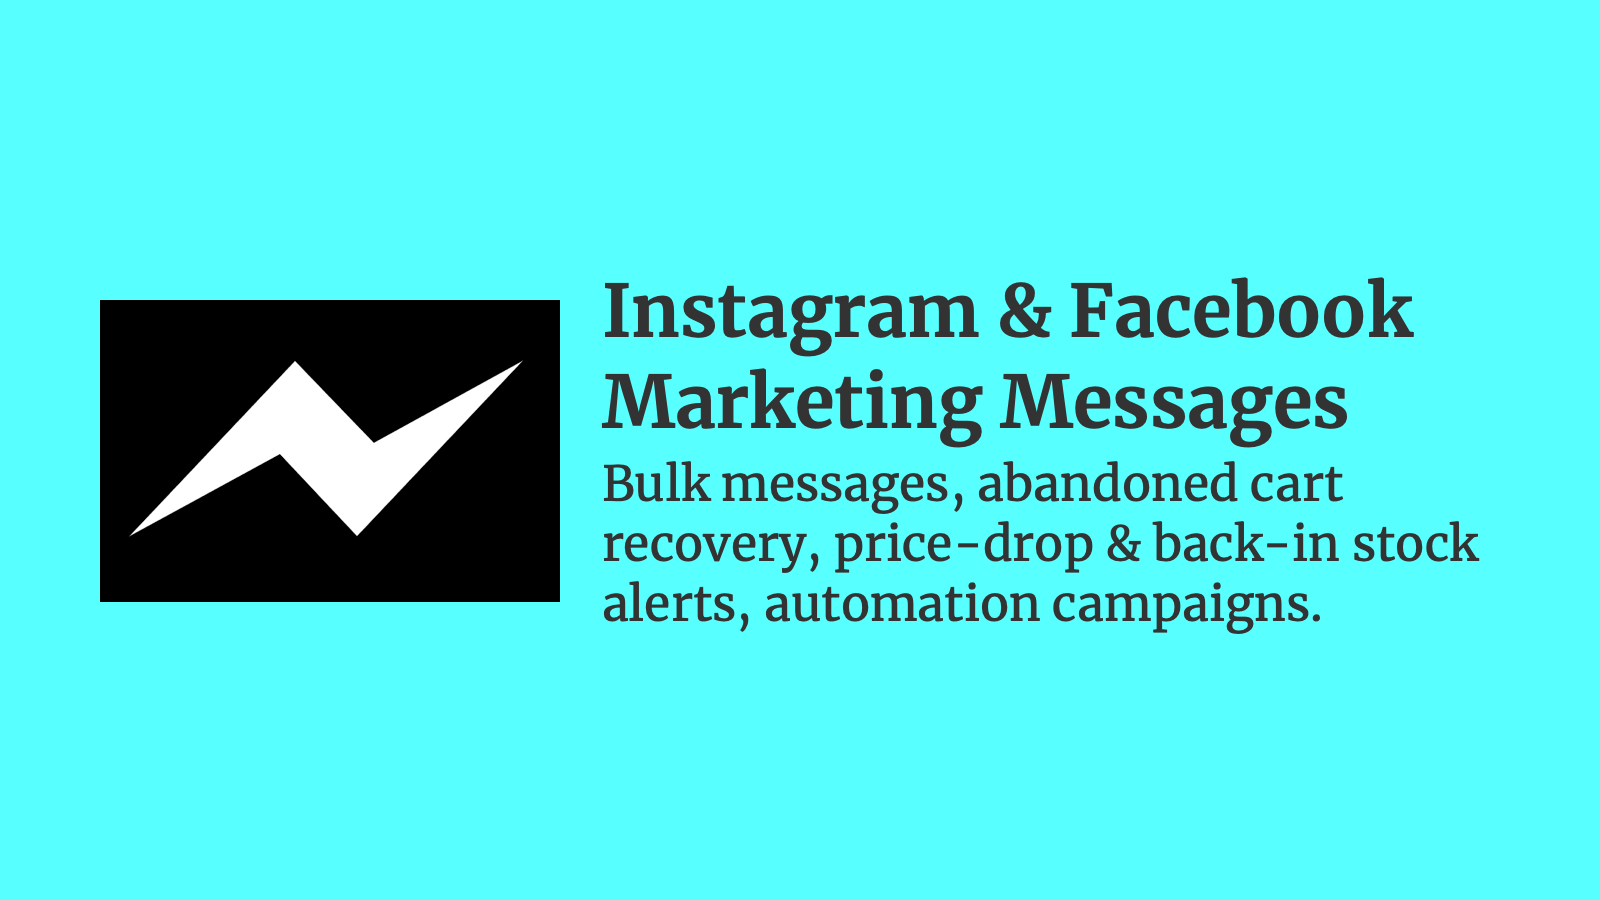 Automatic customer re-engagement via Facebook Messenger